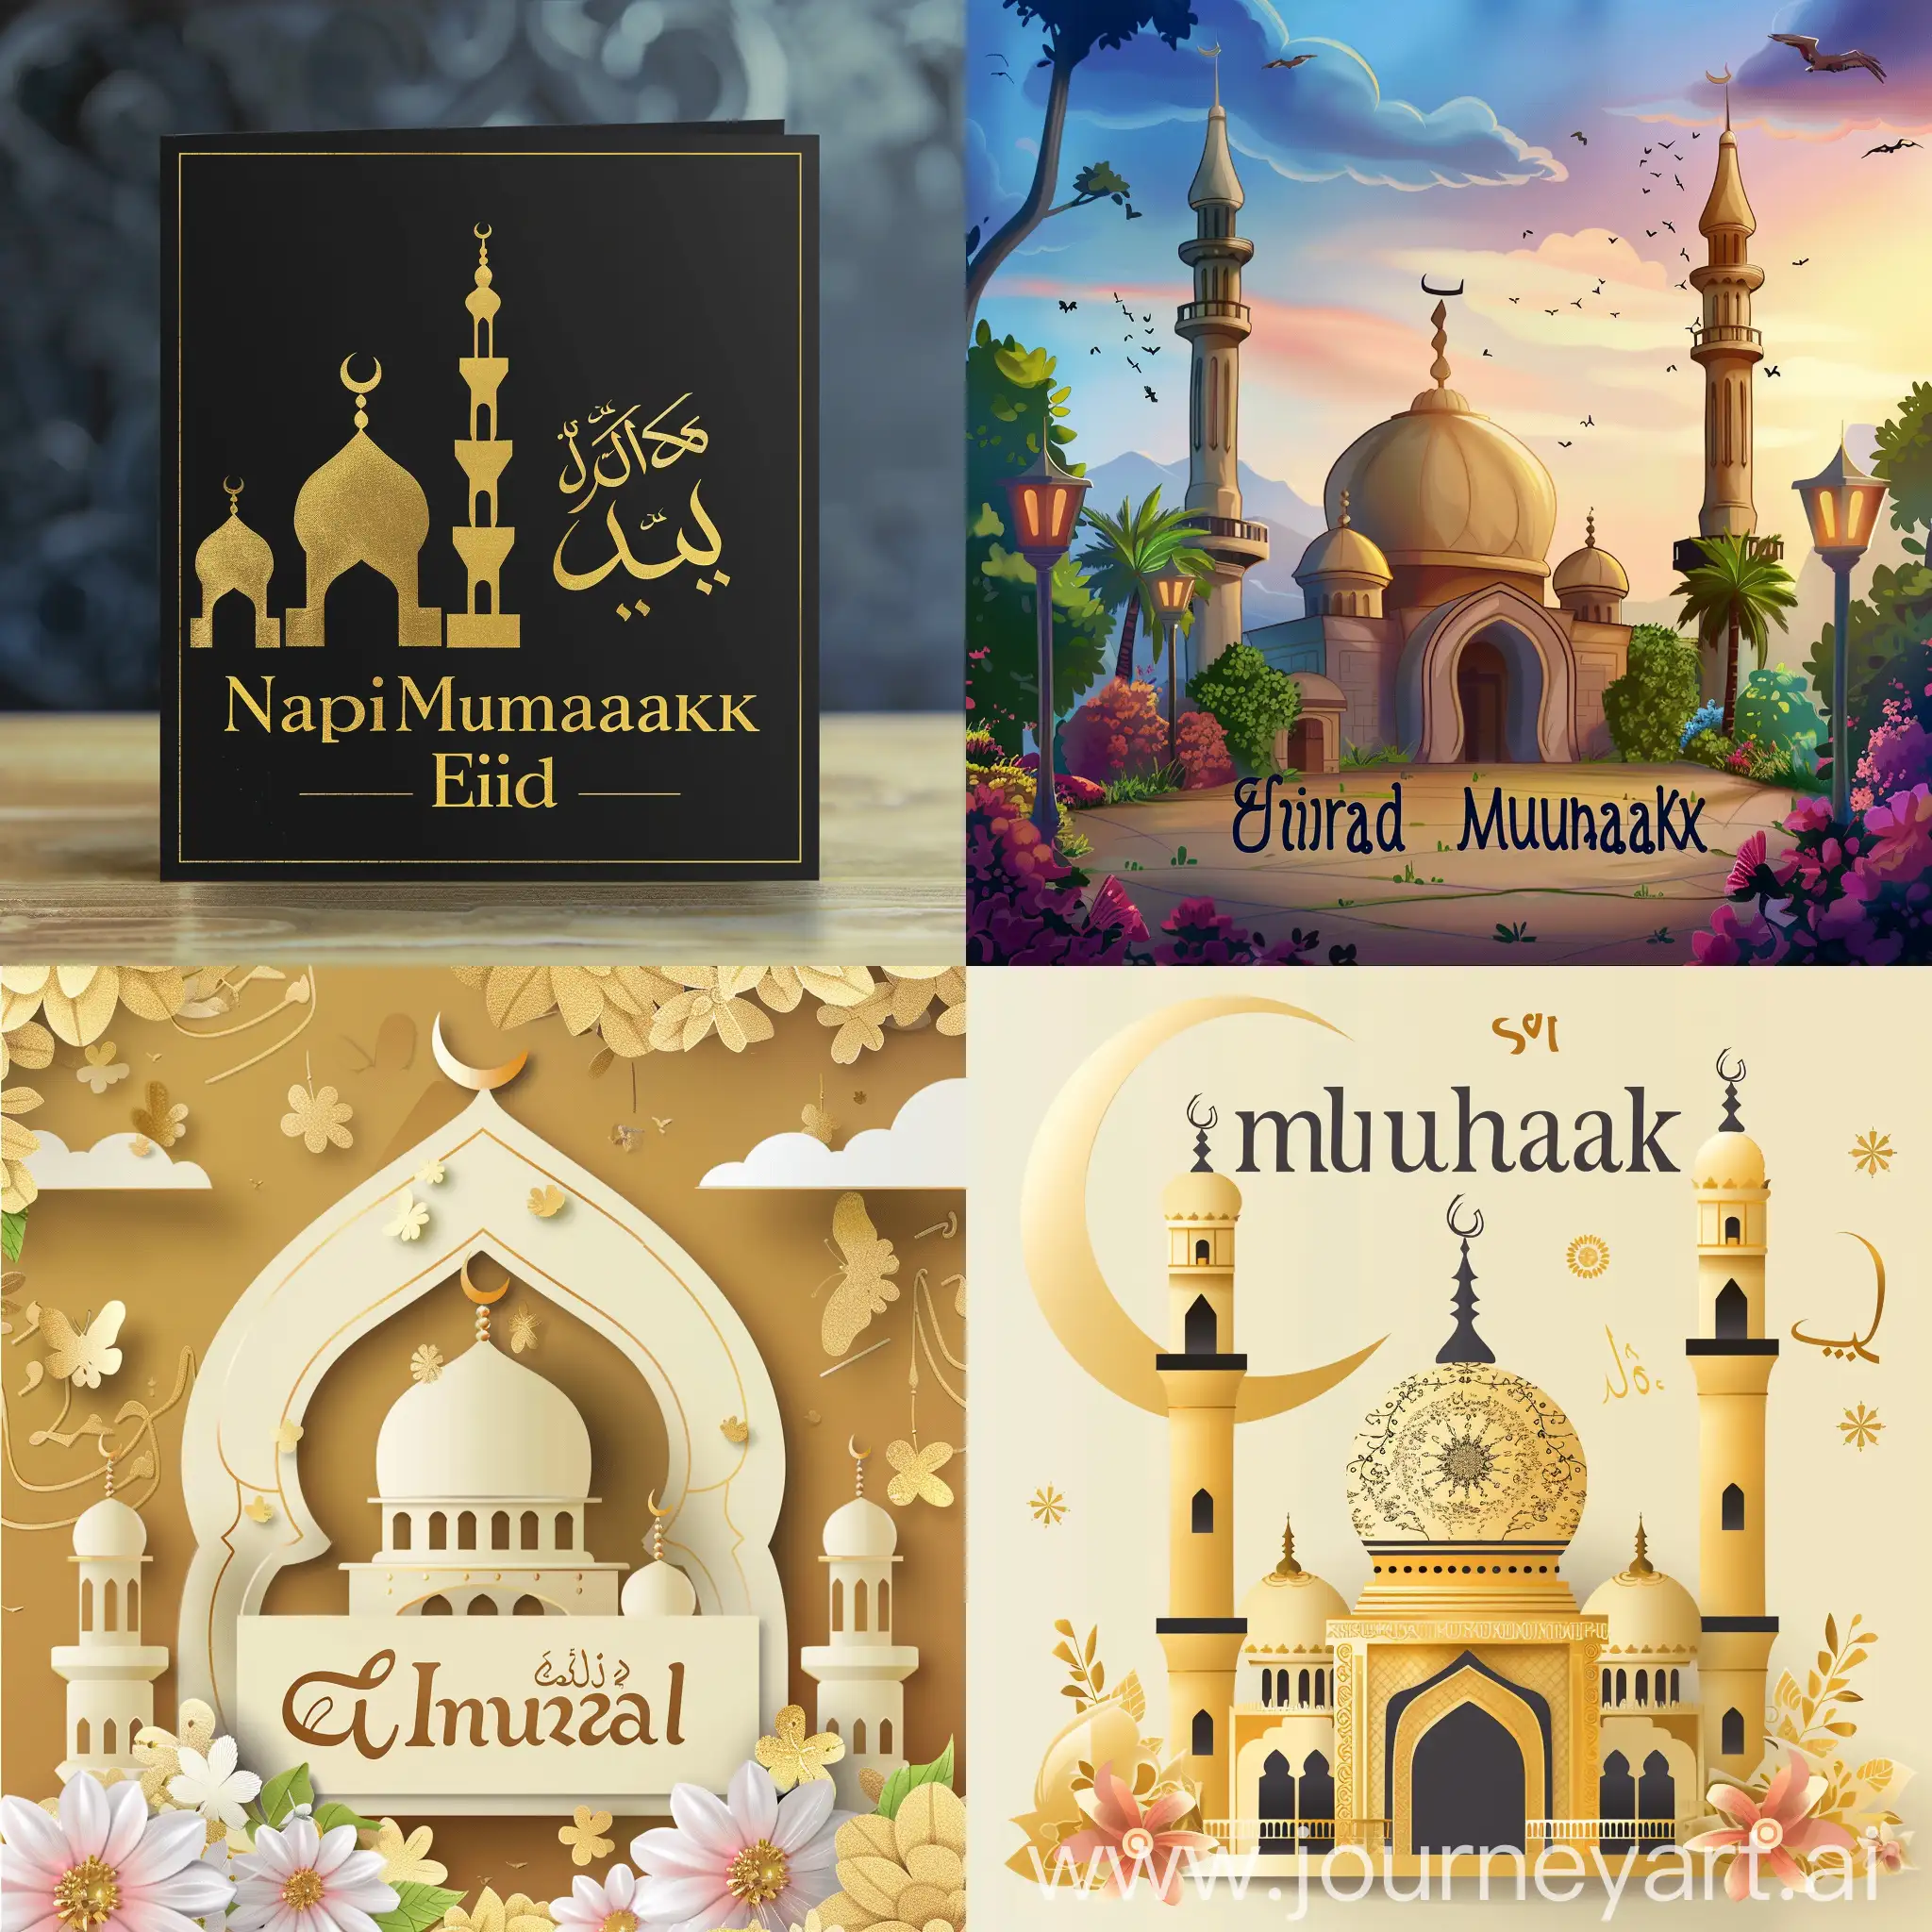 create a beautiful greeting card wishing Eid Mubarak